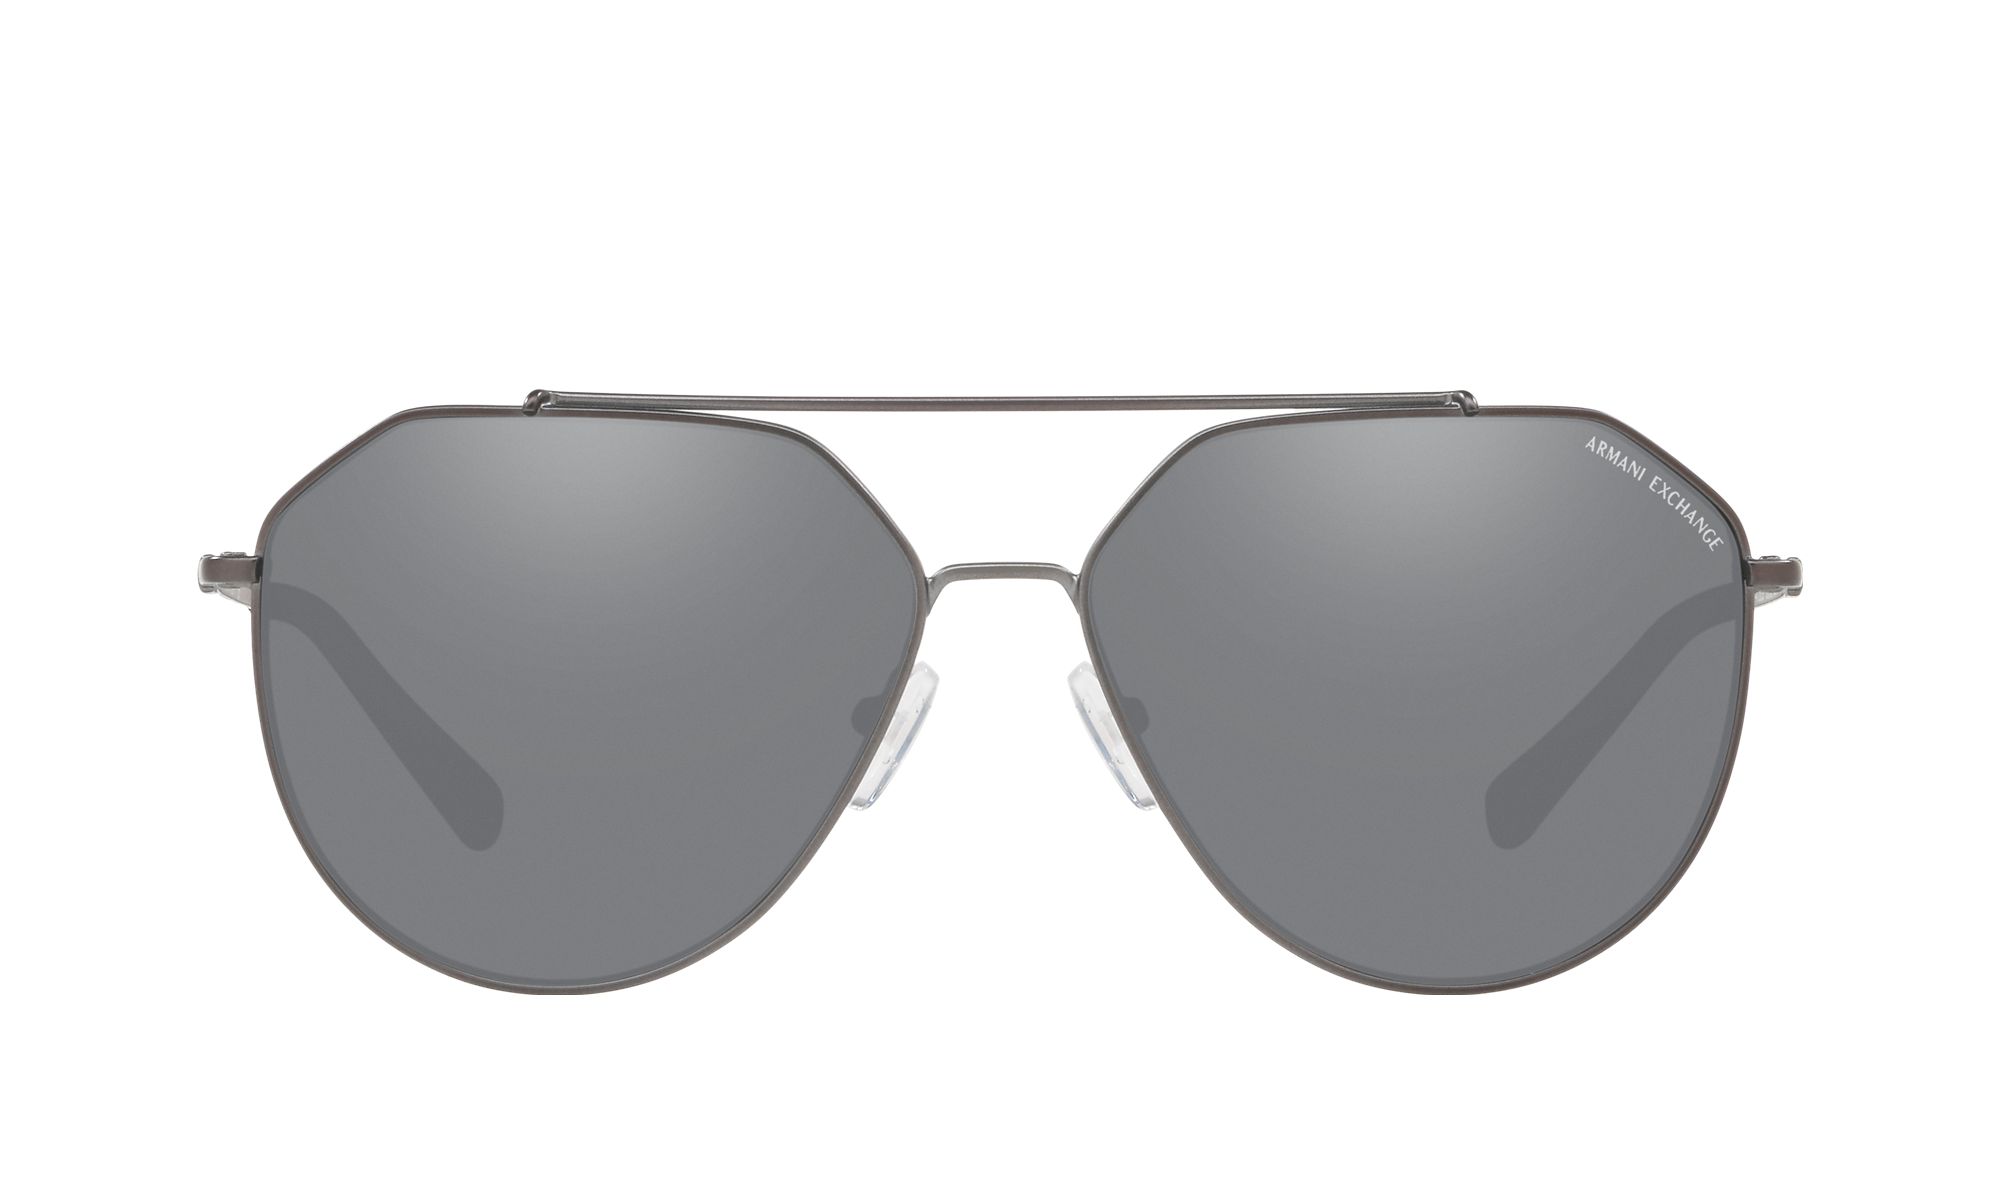 Sunglasses | Glasses.com®